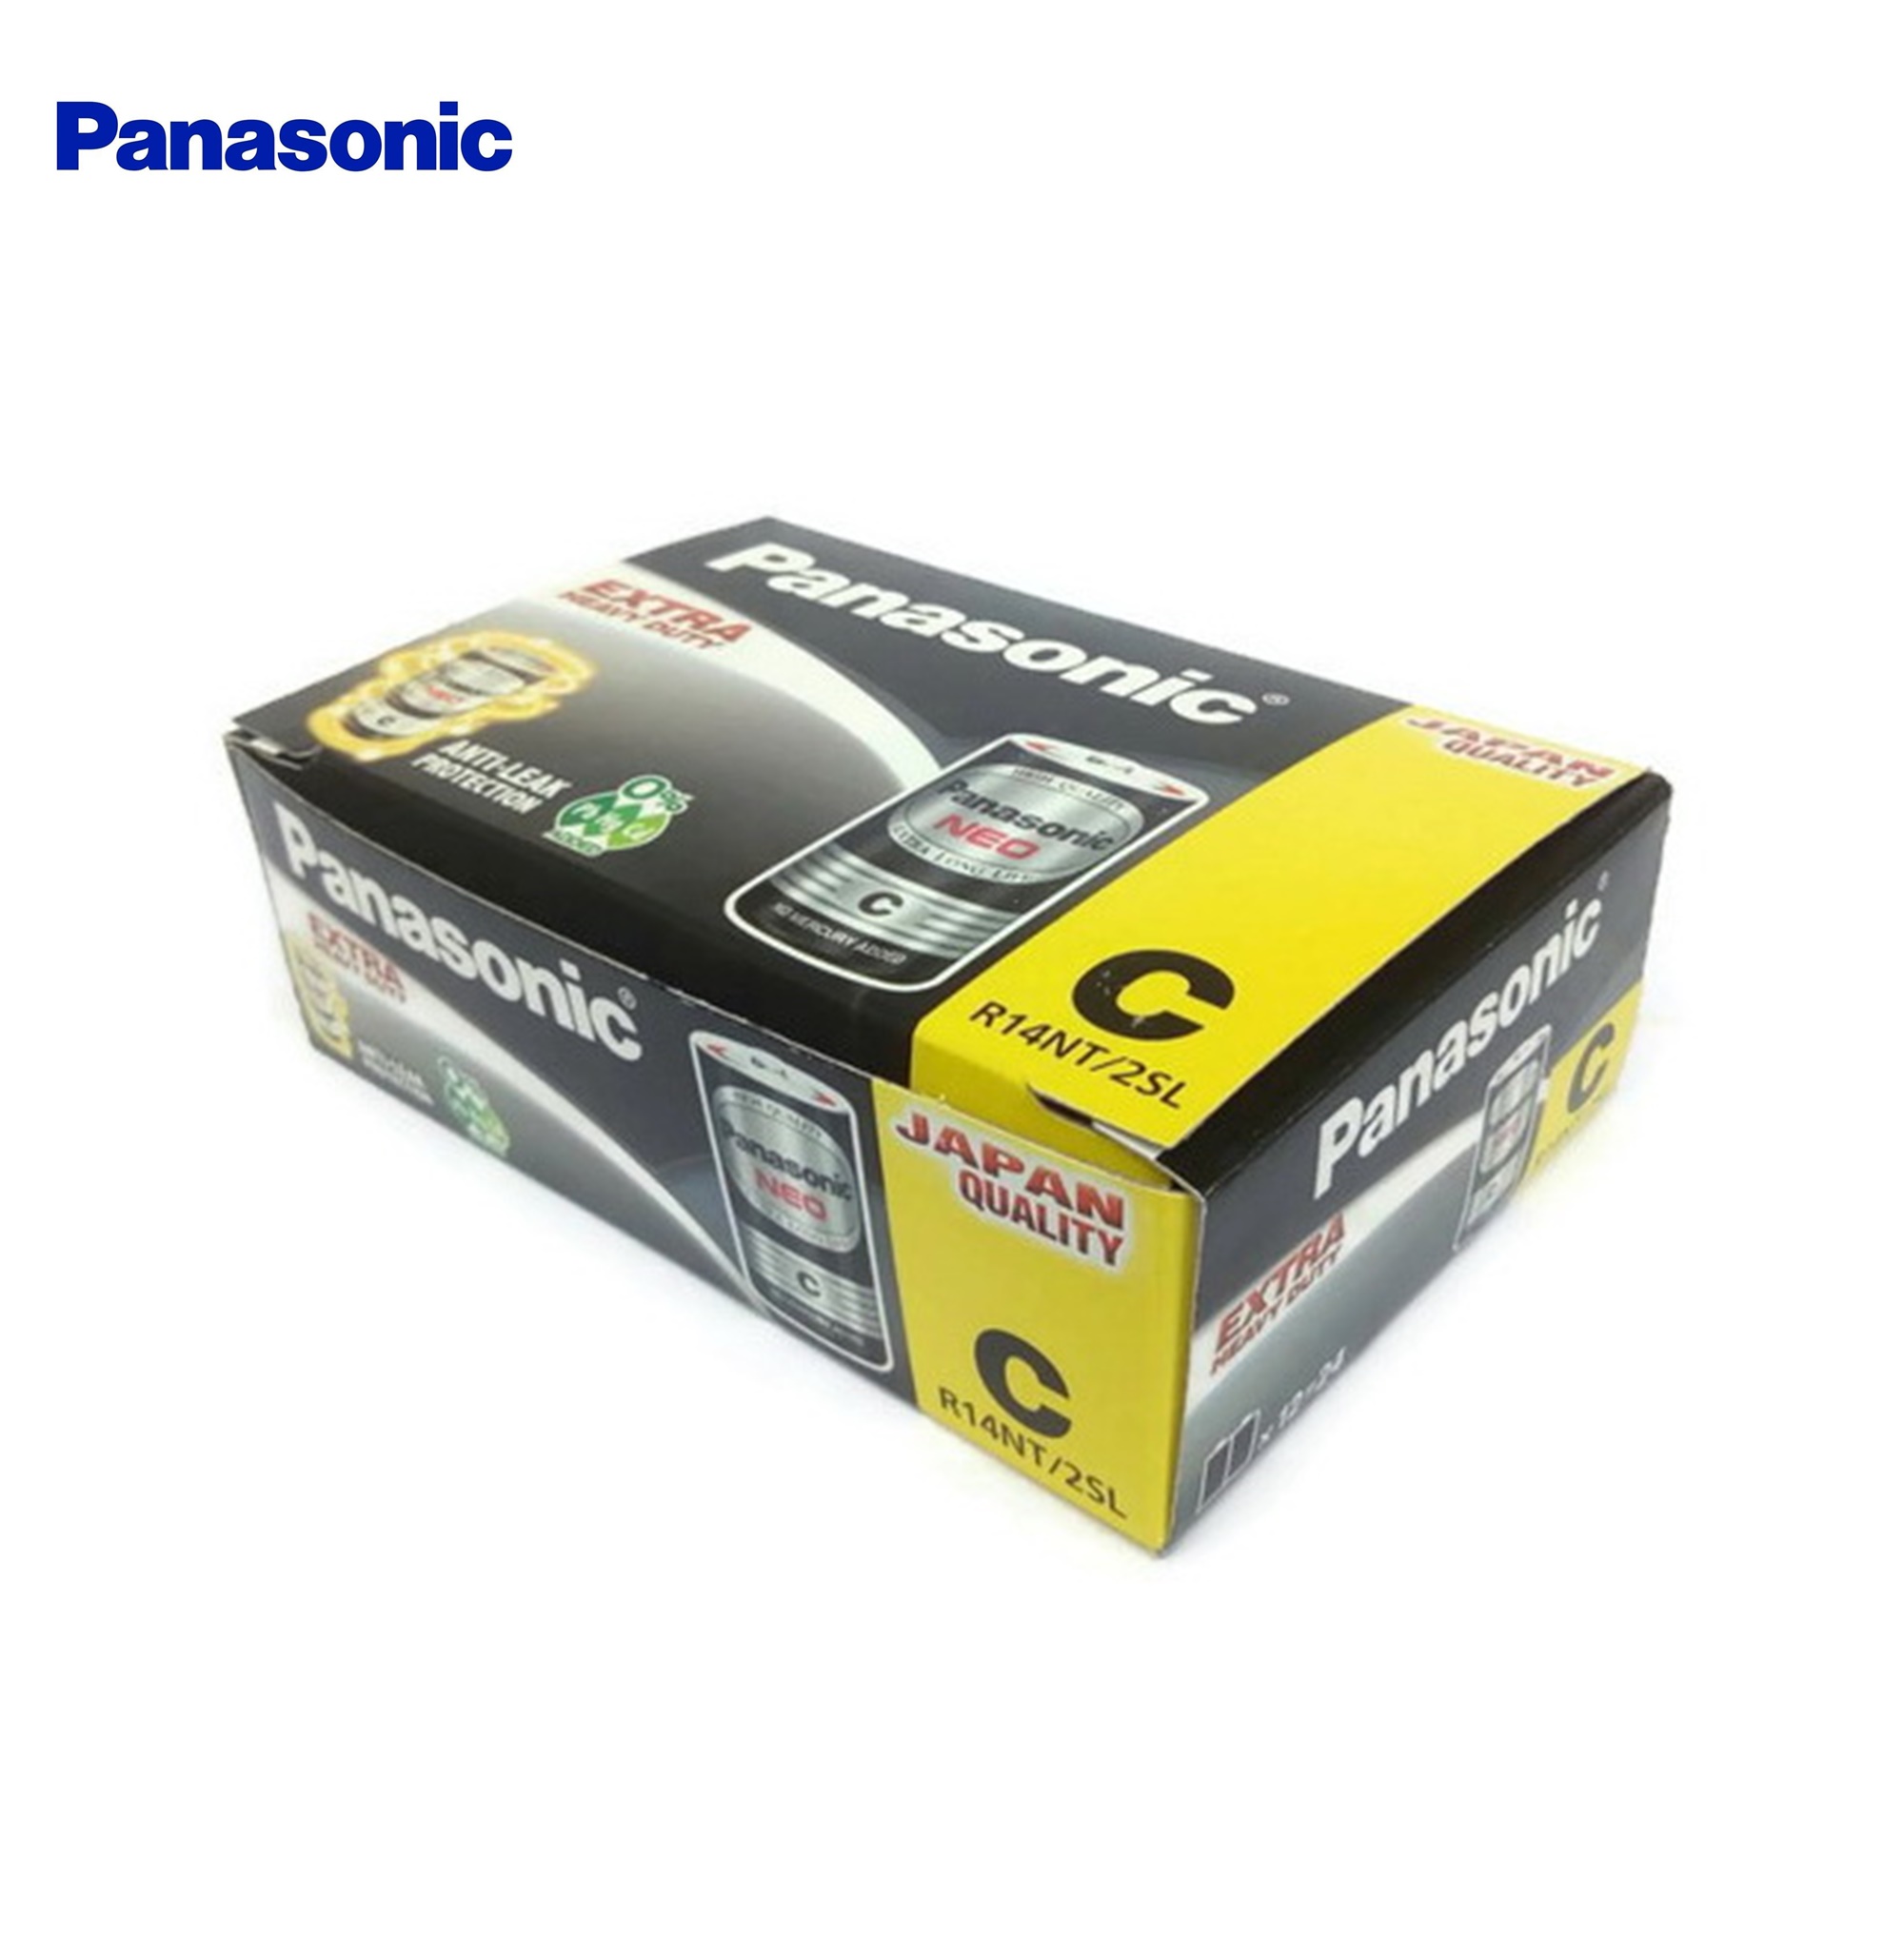 Panasonic Battery NEO ถ่านพานาโซนิค ขนาด C สีดำ รุ่น R14NT/2SL แพ็ค 2 ก้อน x 12 แพ็ค (24 ก้อน)